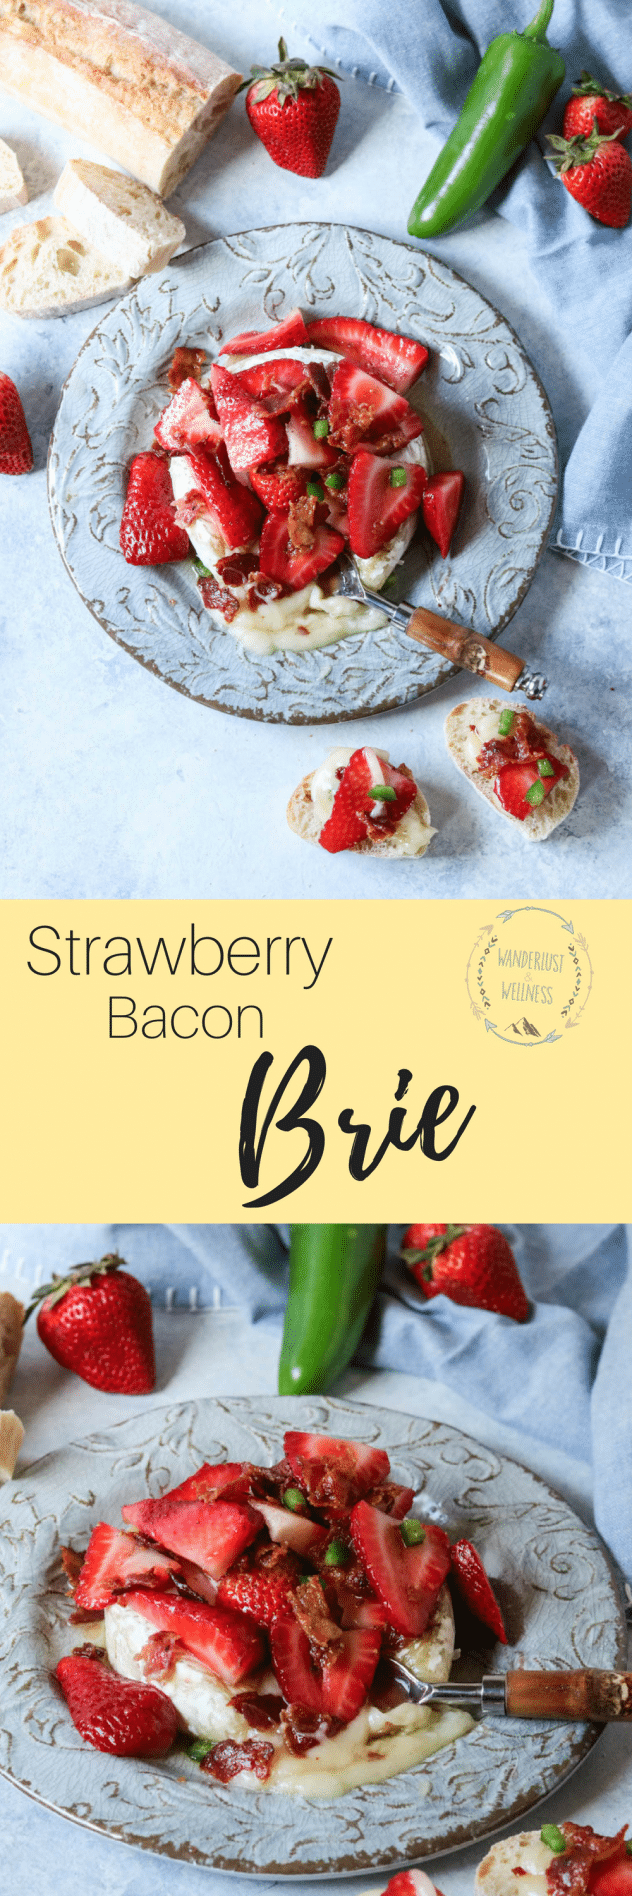 strawberry bacon brie